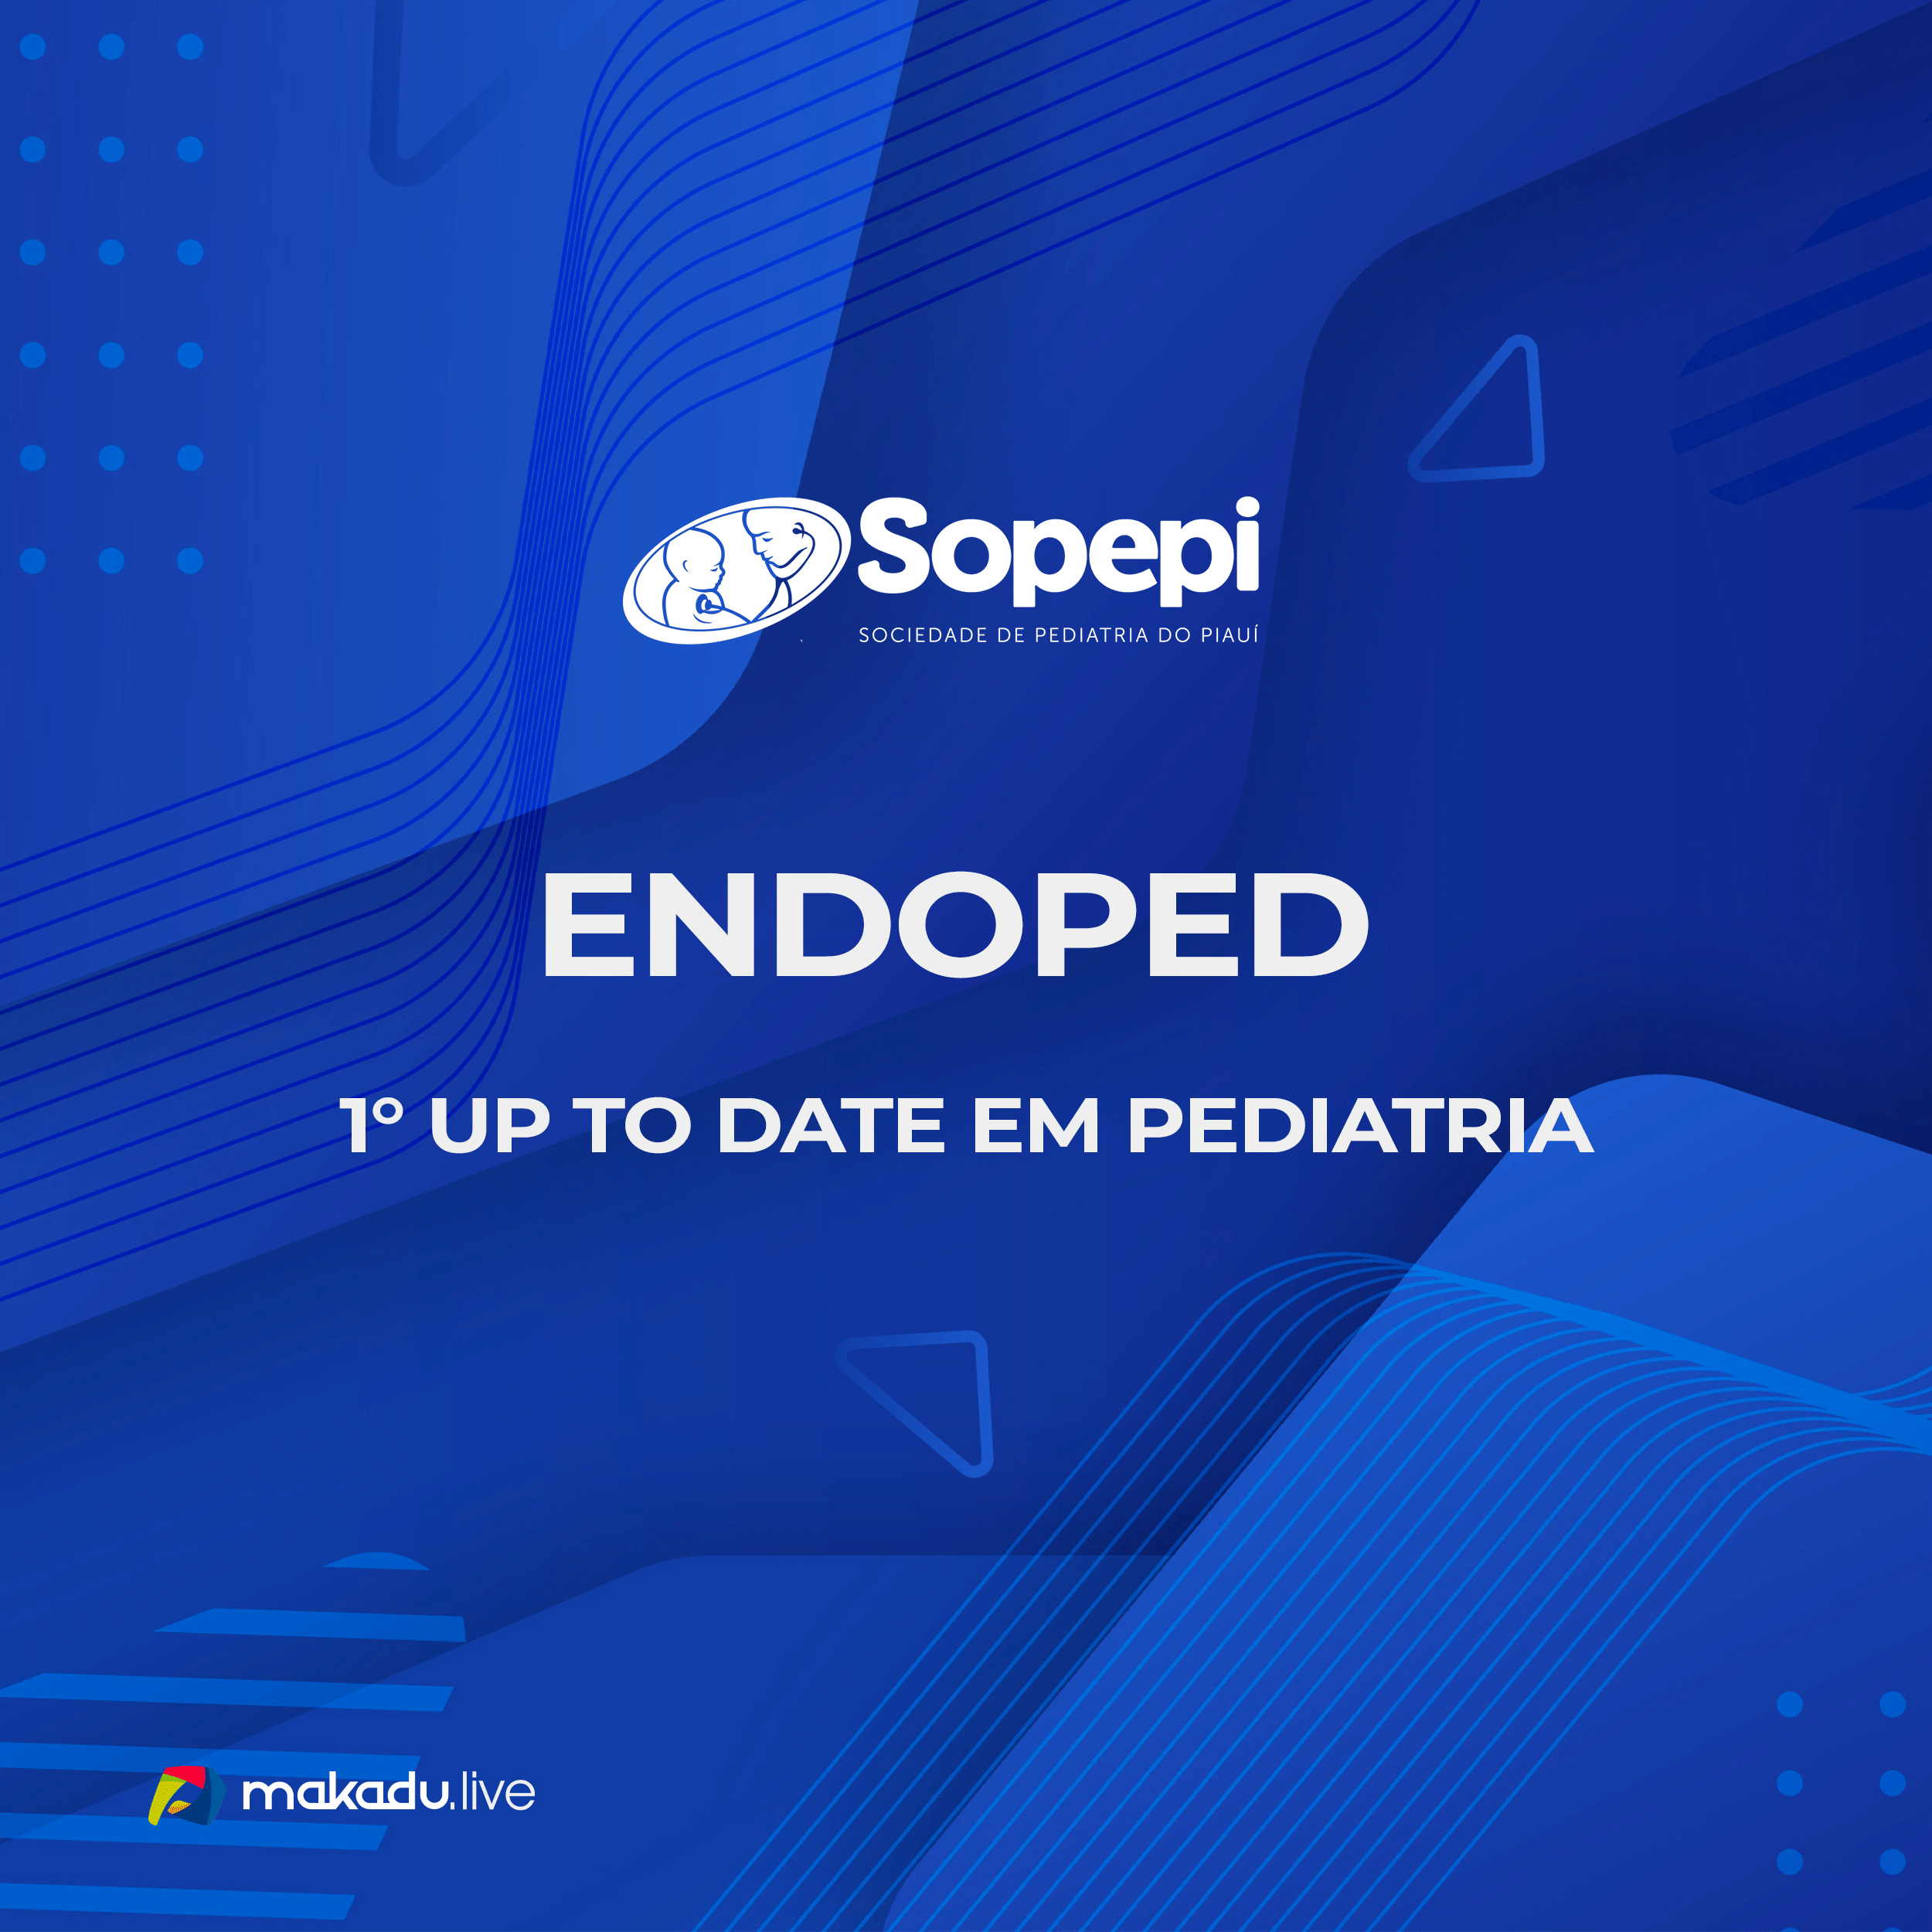 Sopepi Endoped - Whats